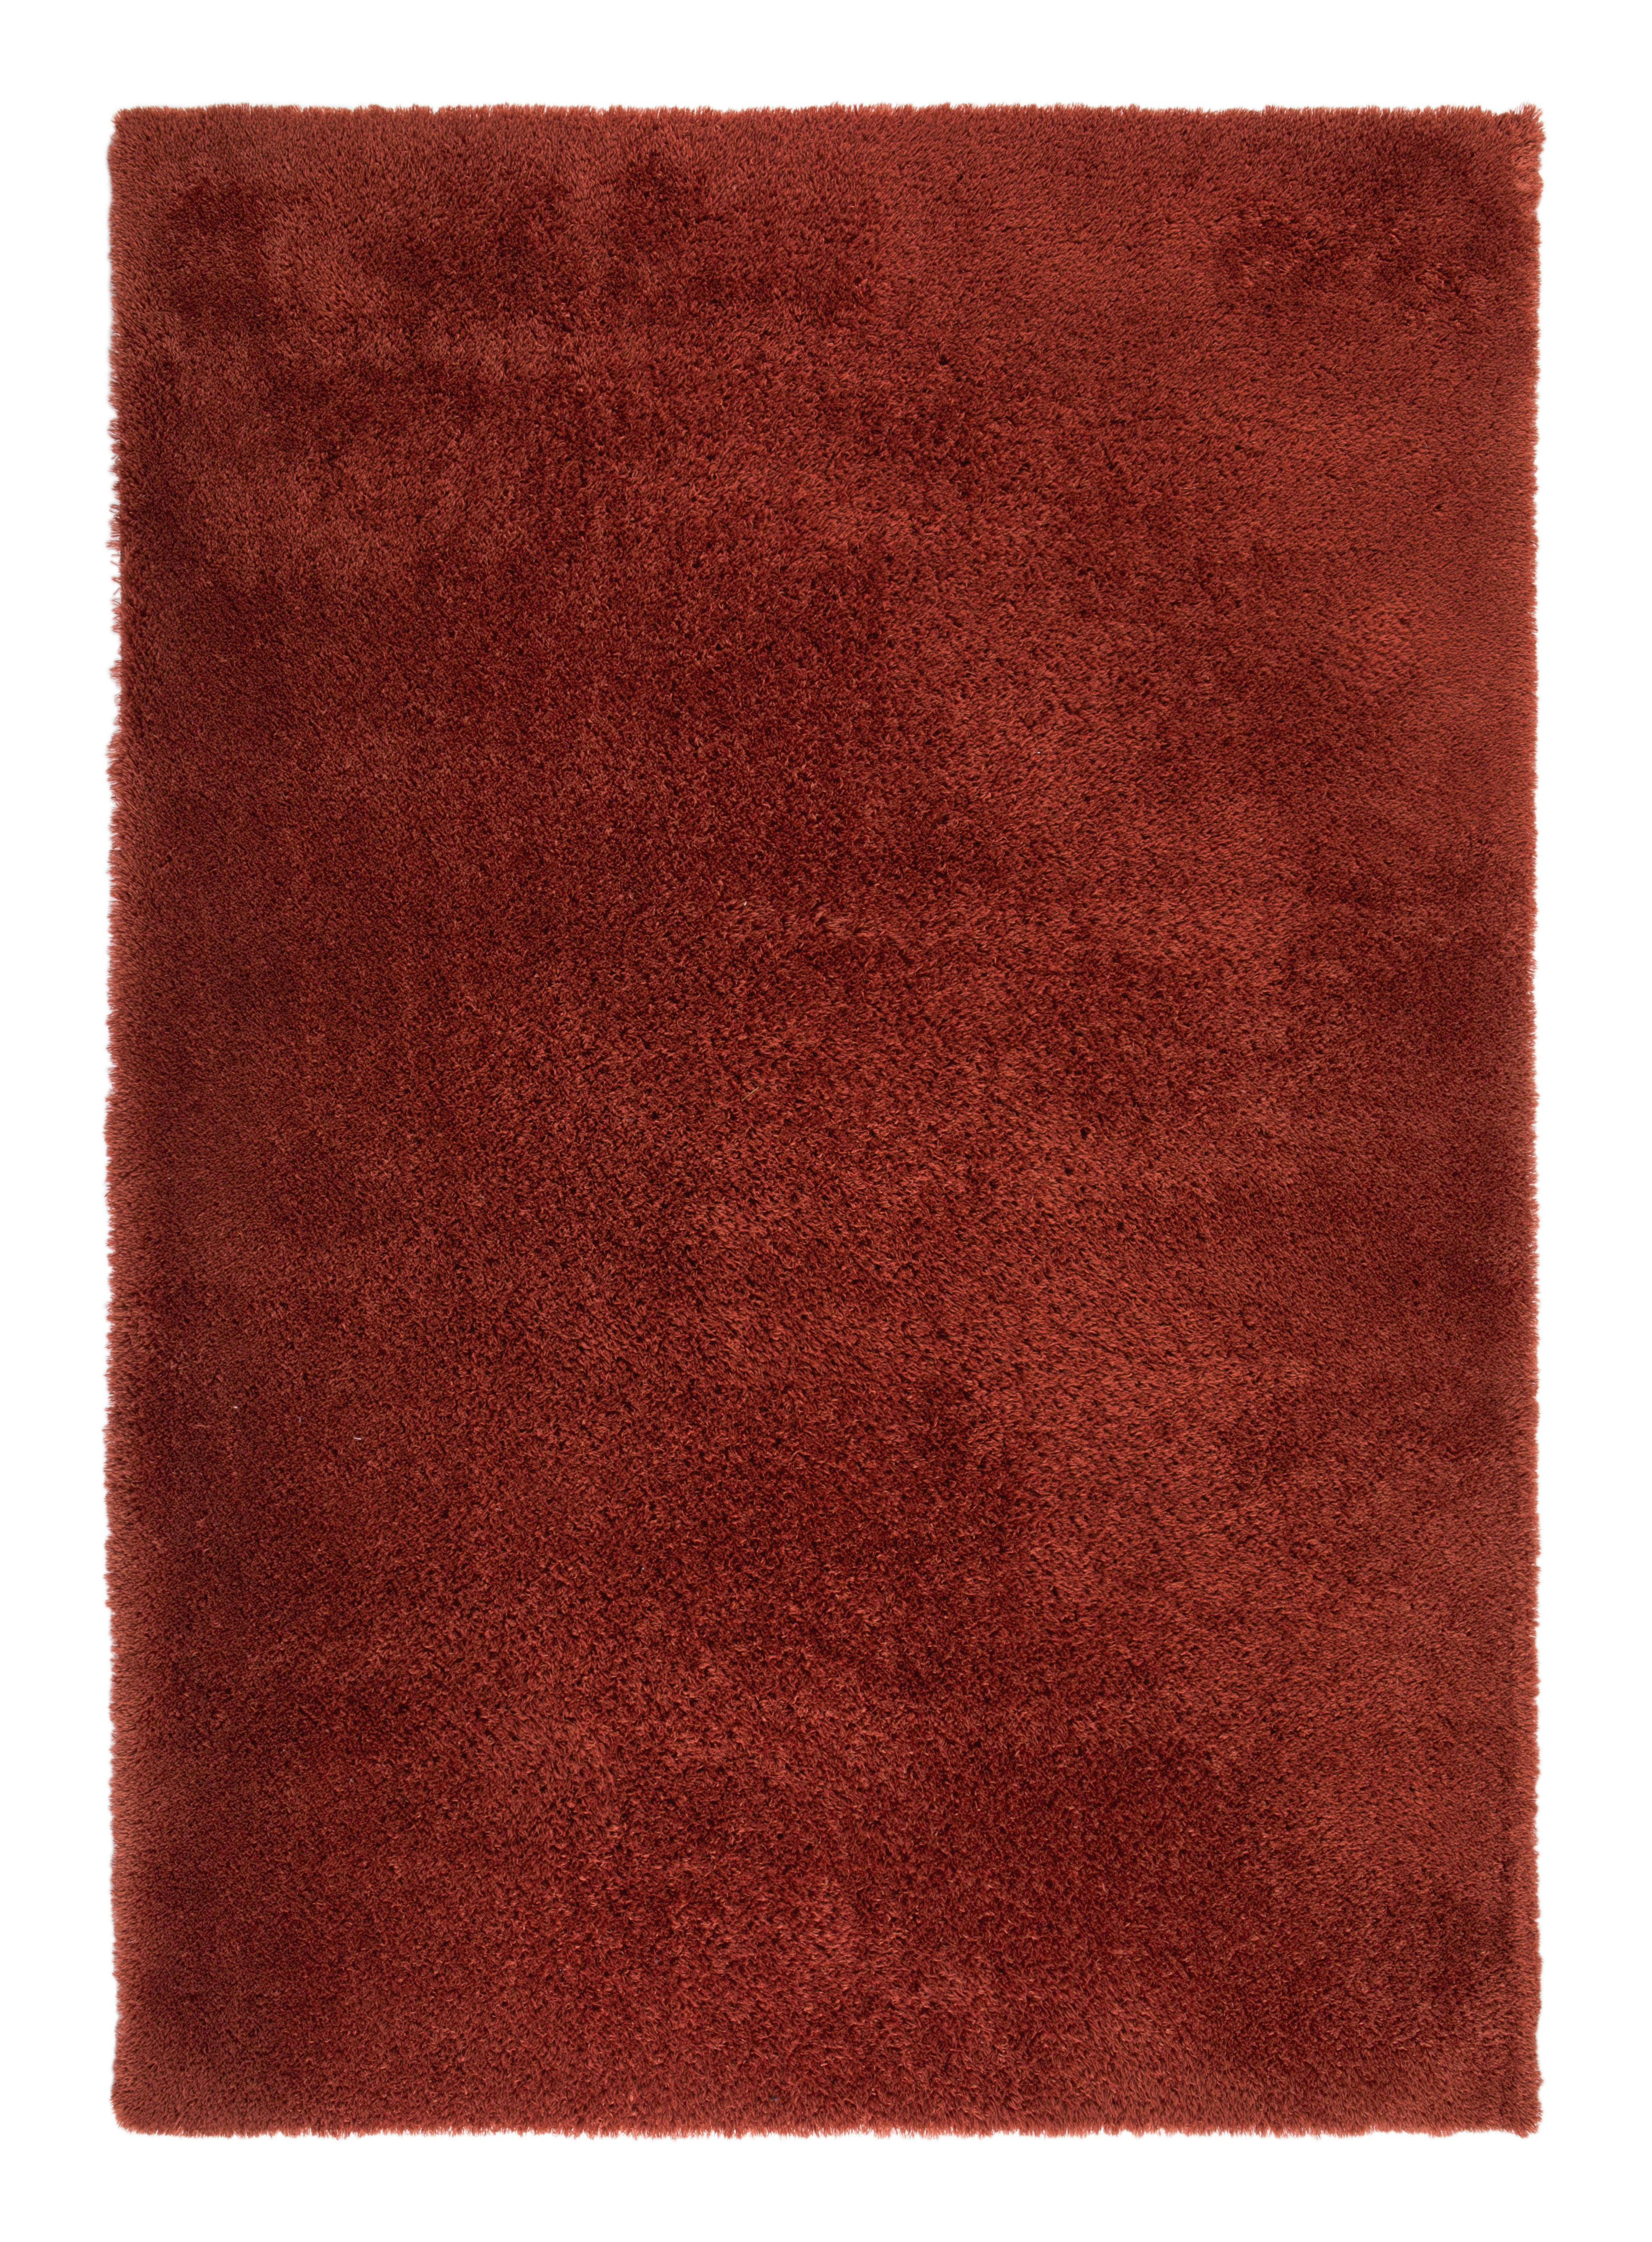 RYAMATTA Cosy  - kopparfärgad, Klassisk, textil (120/170cm) - Boxxx